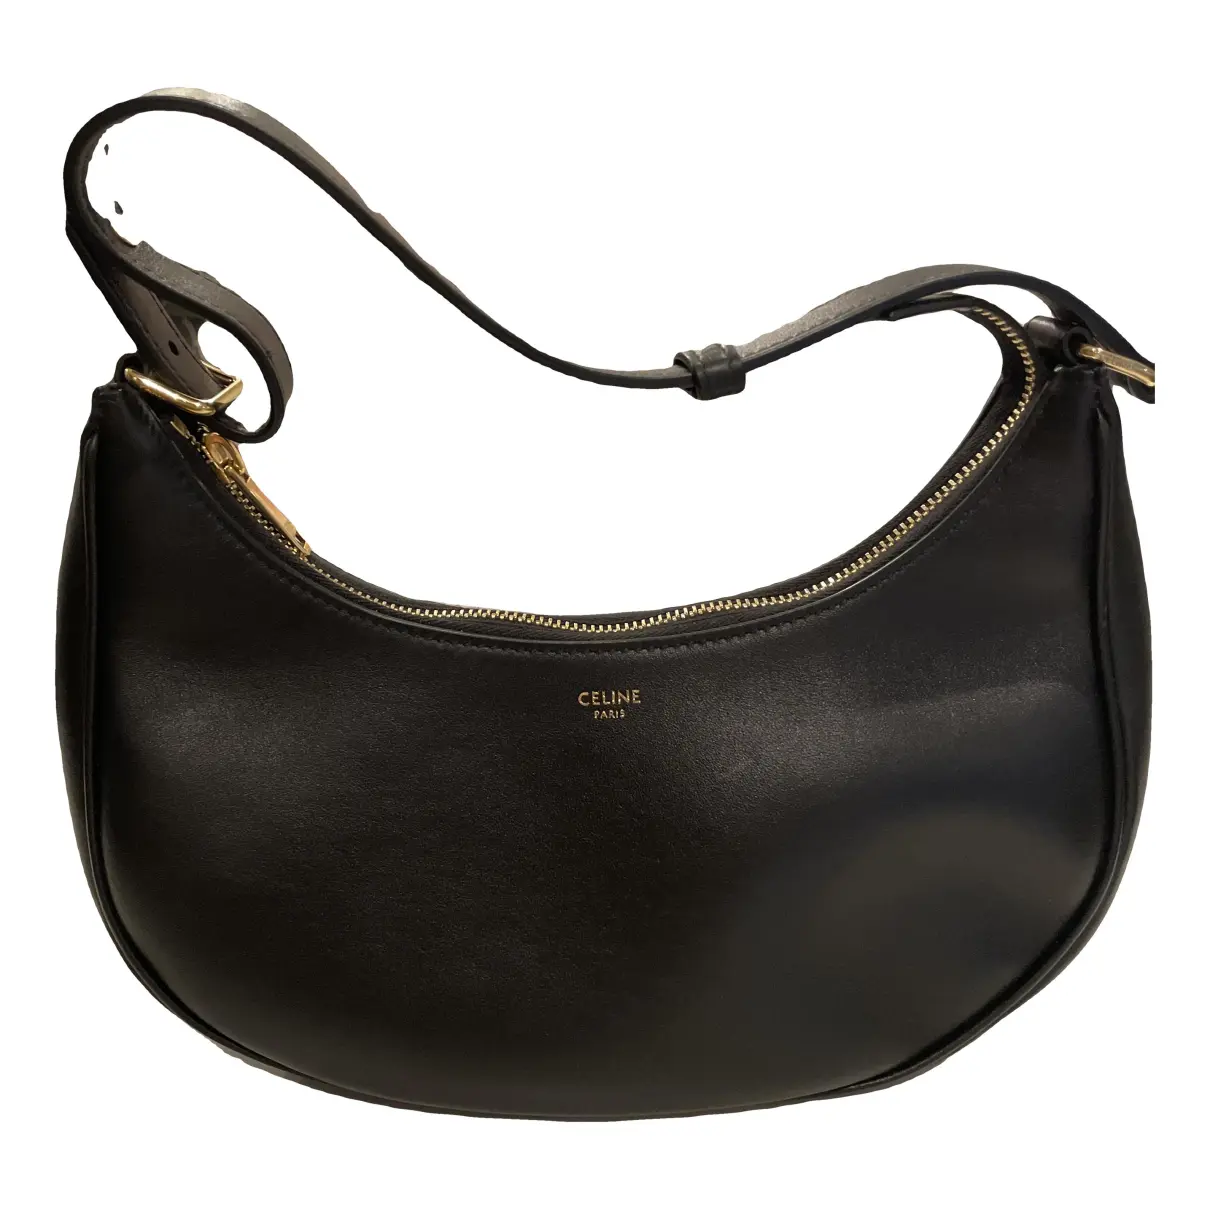 Ava leather handbag